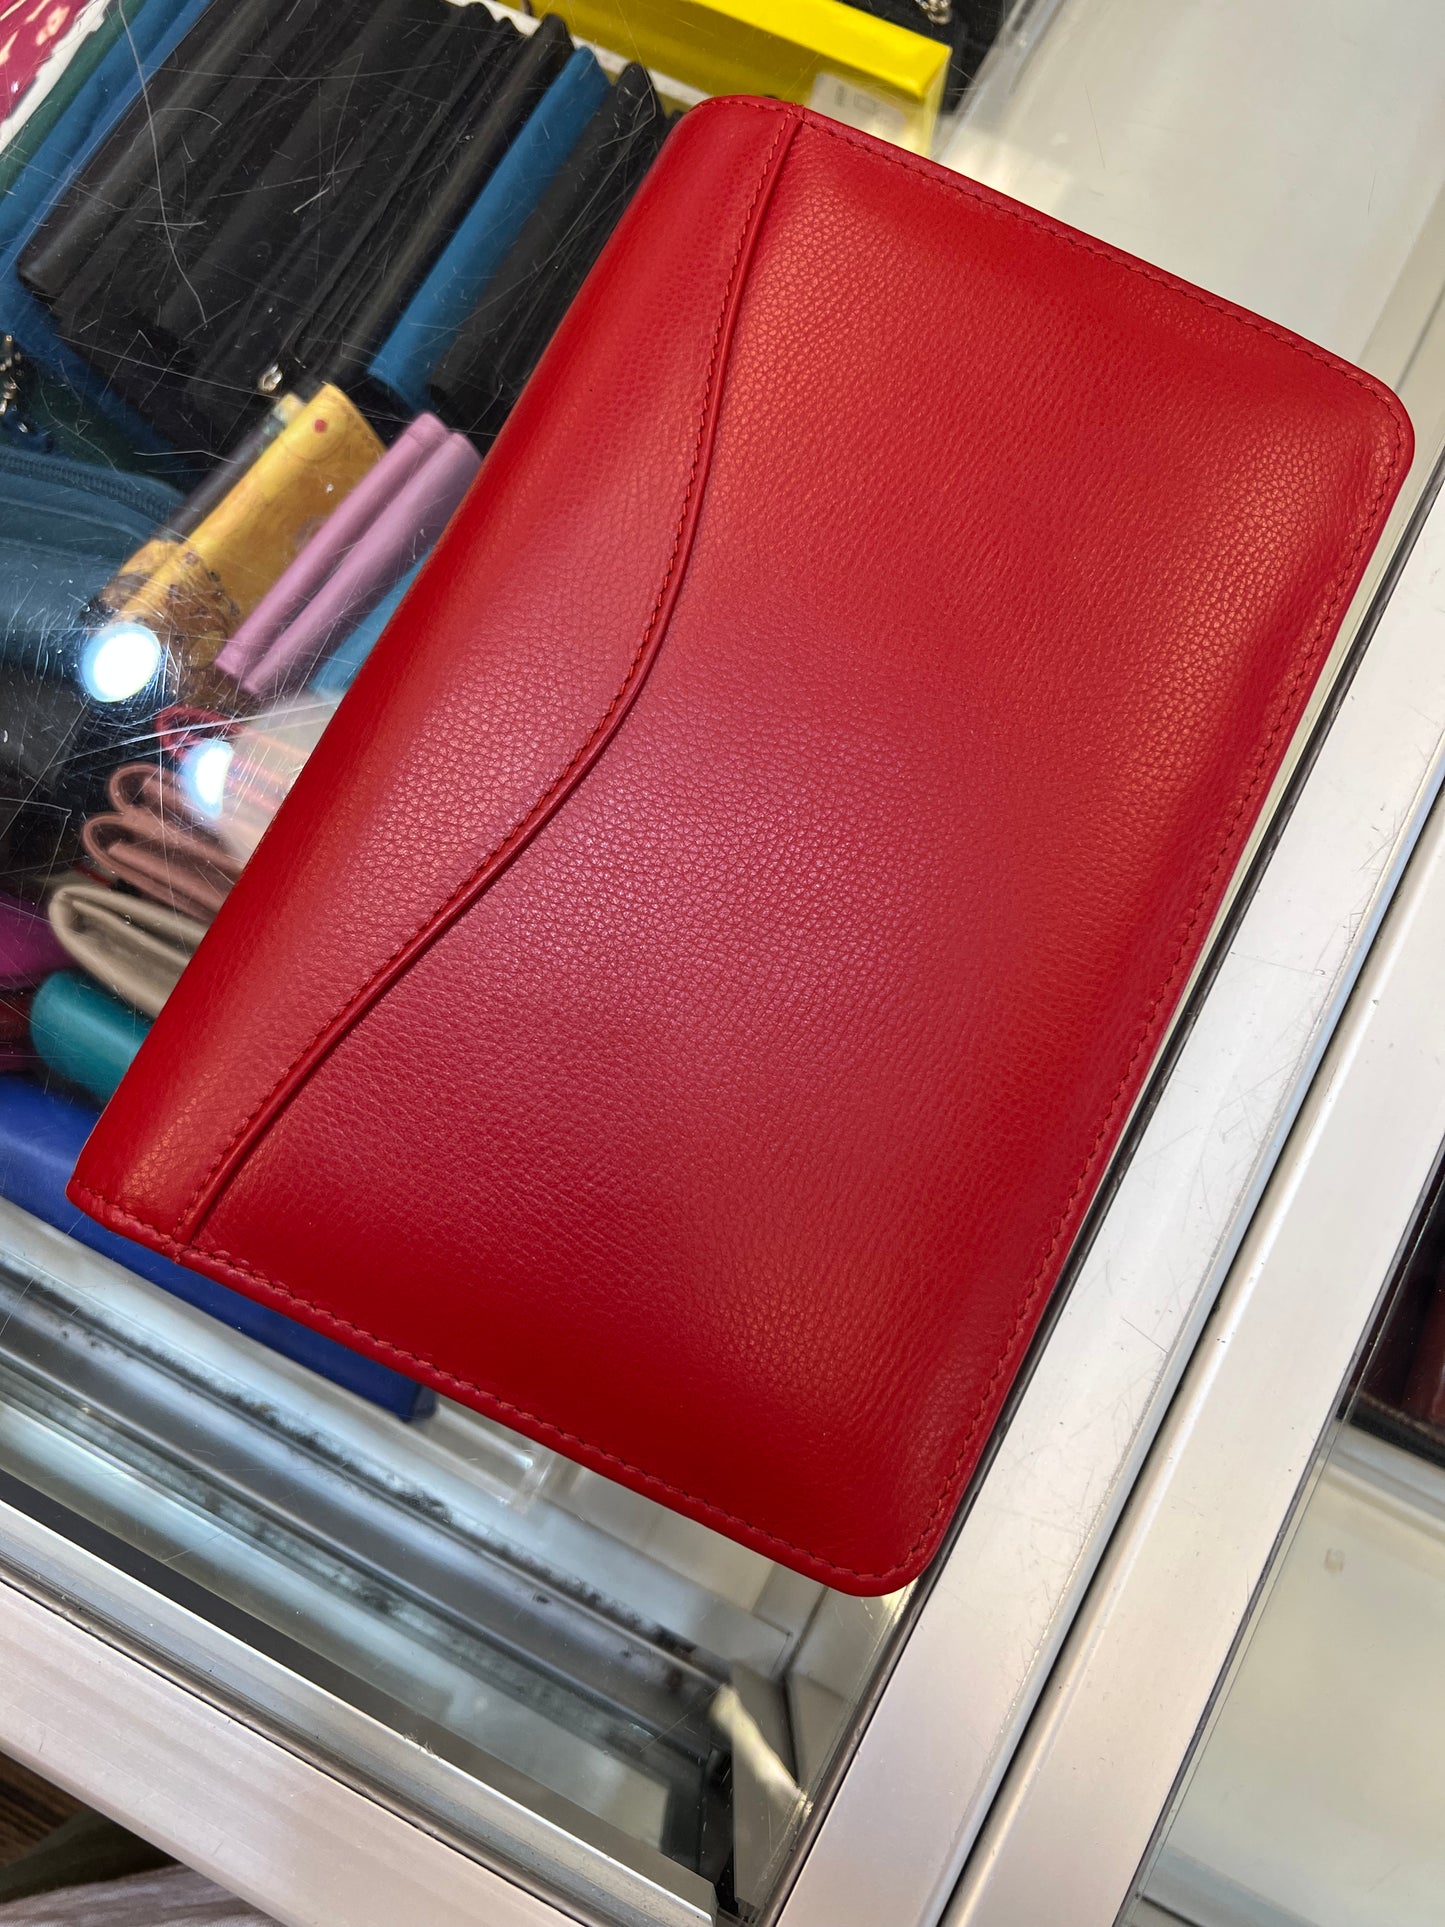 ili New York Small Leather Writing Padfolio (Red)